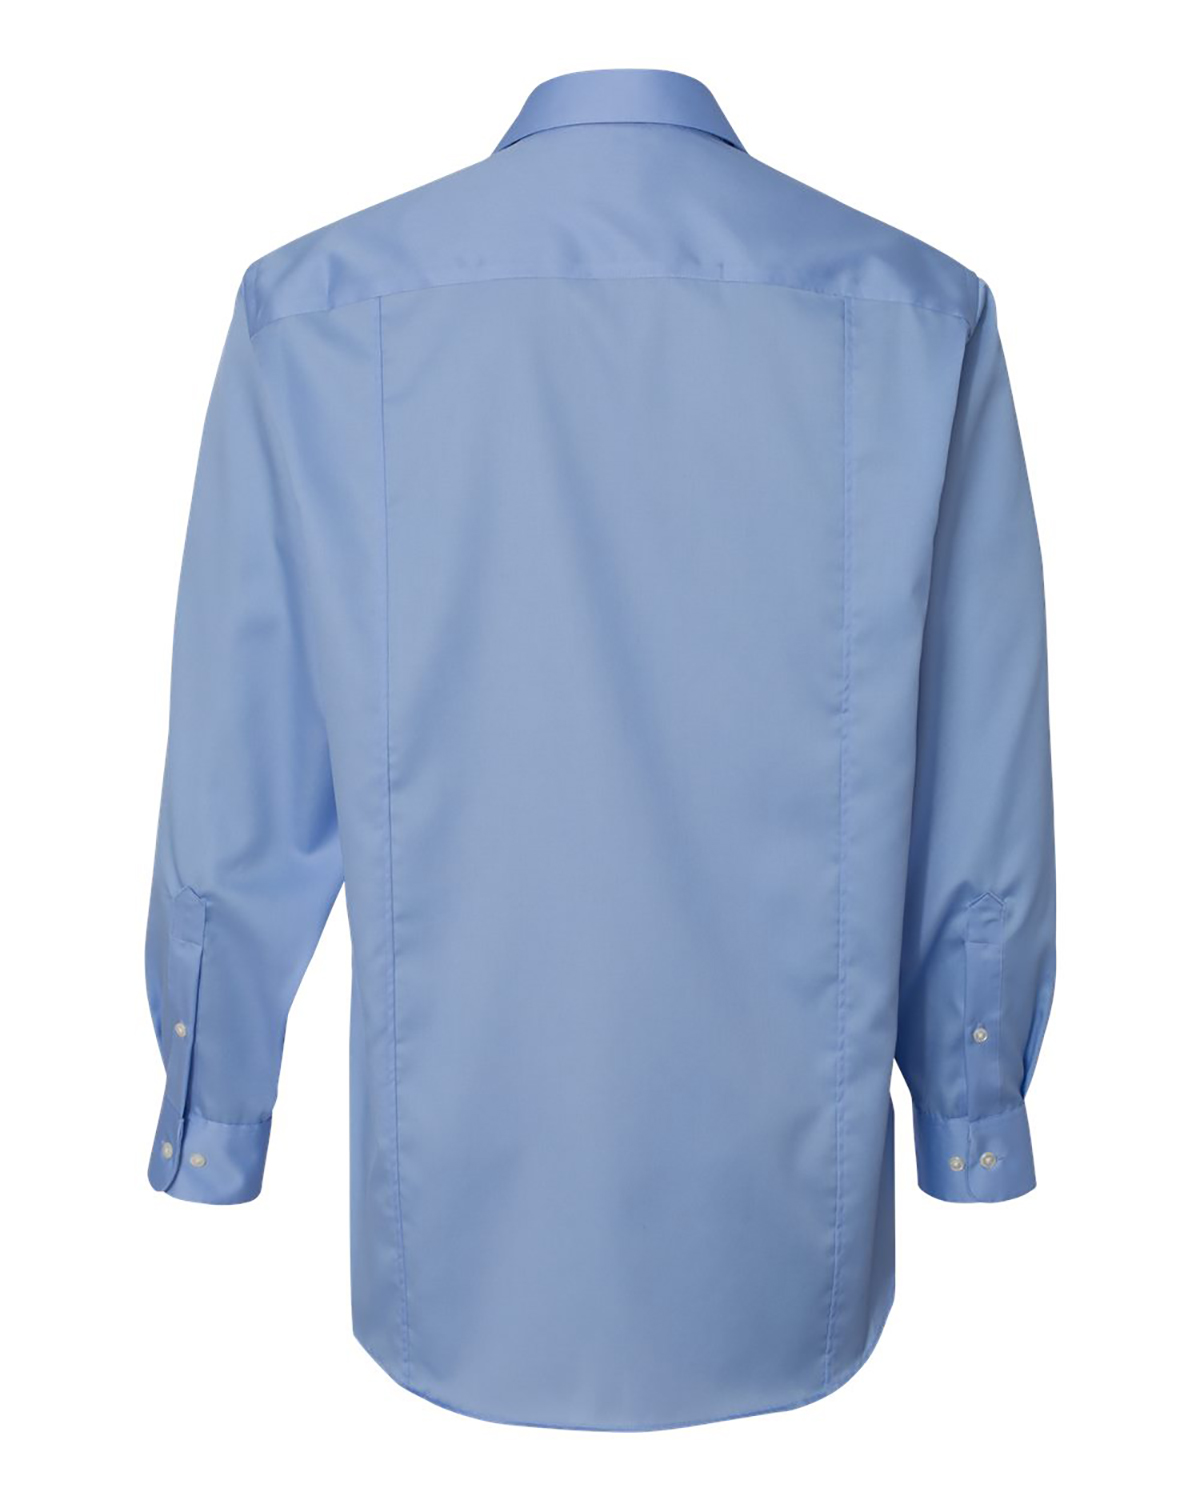 'Sierra Pacific 3211 Long Sleeve Denim Shirt'